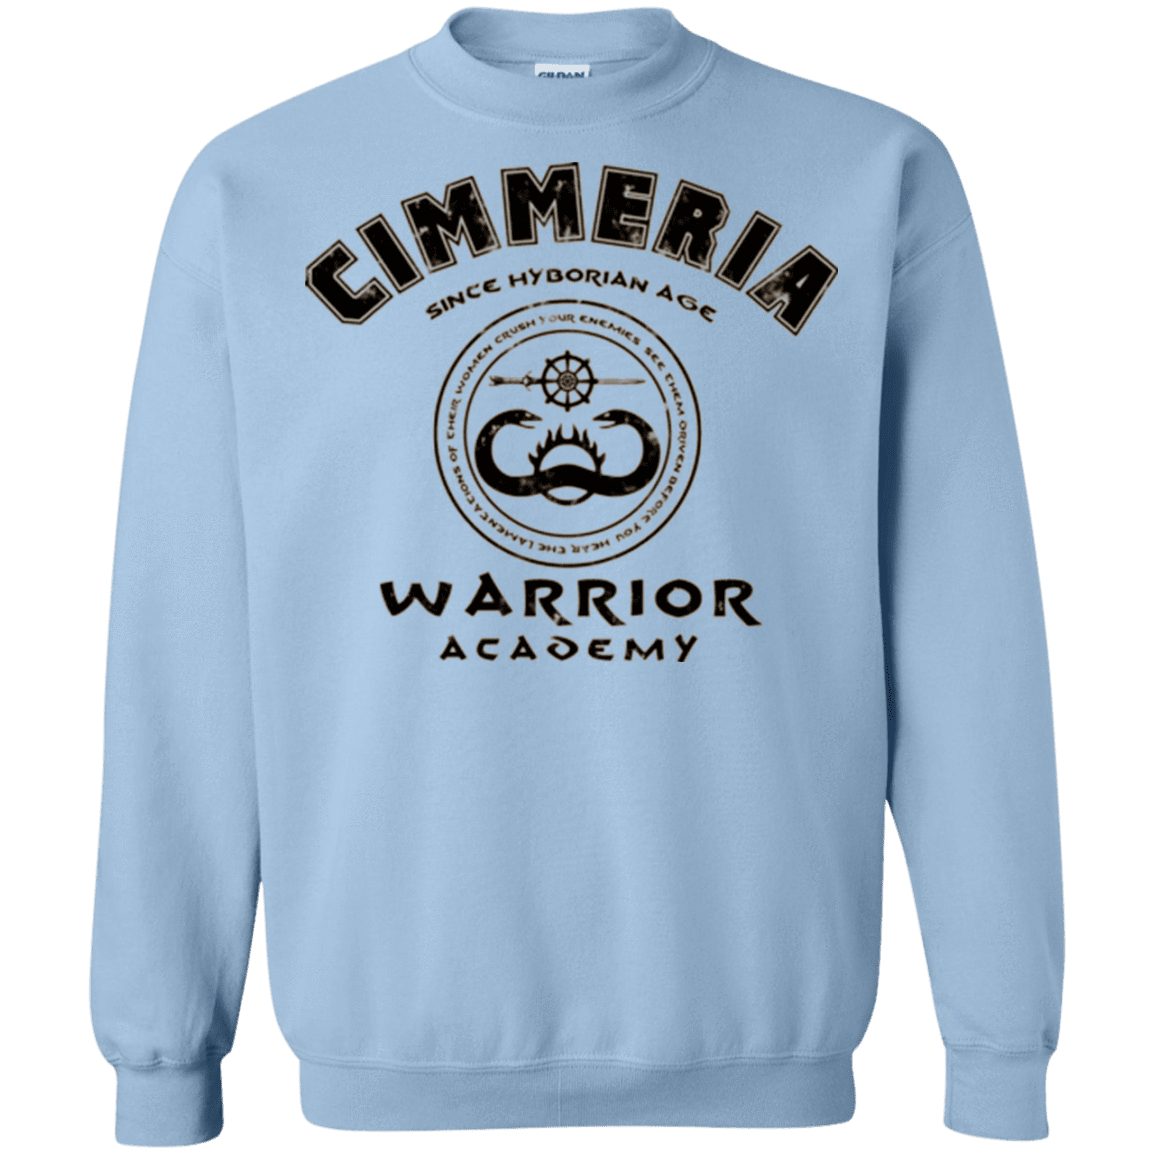 Sweatshirts Light Blue / Small Crimmeria Warrior academy Crewneck Sweatshirt